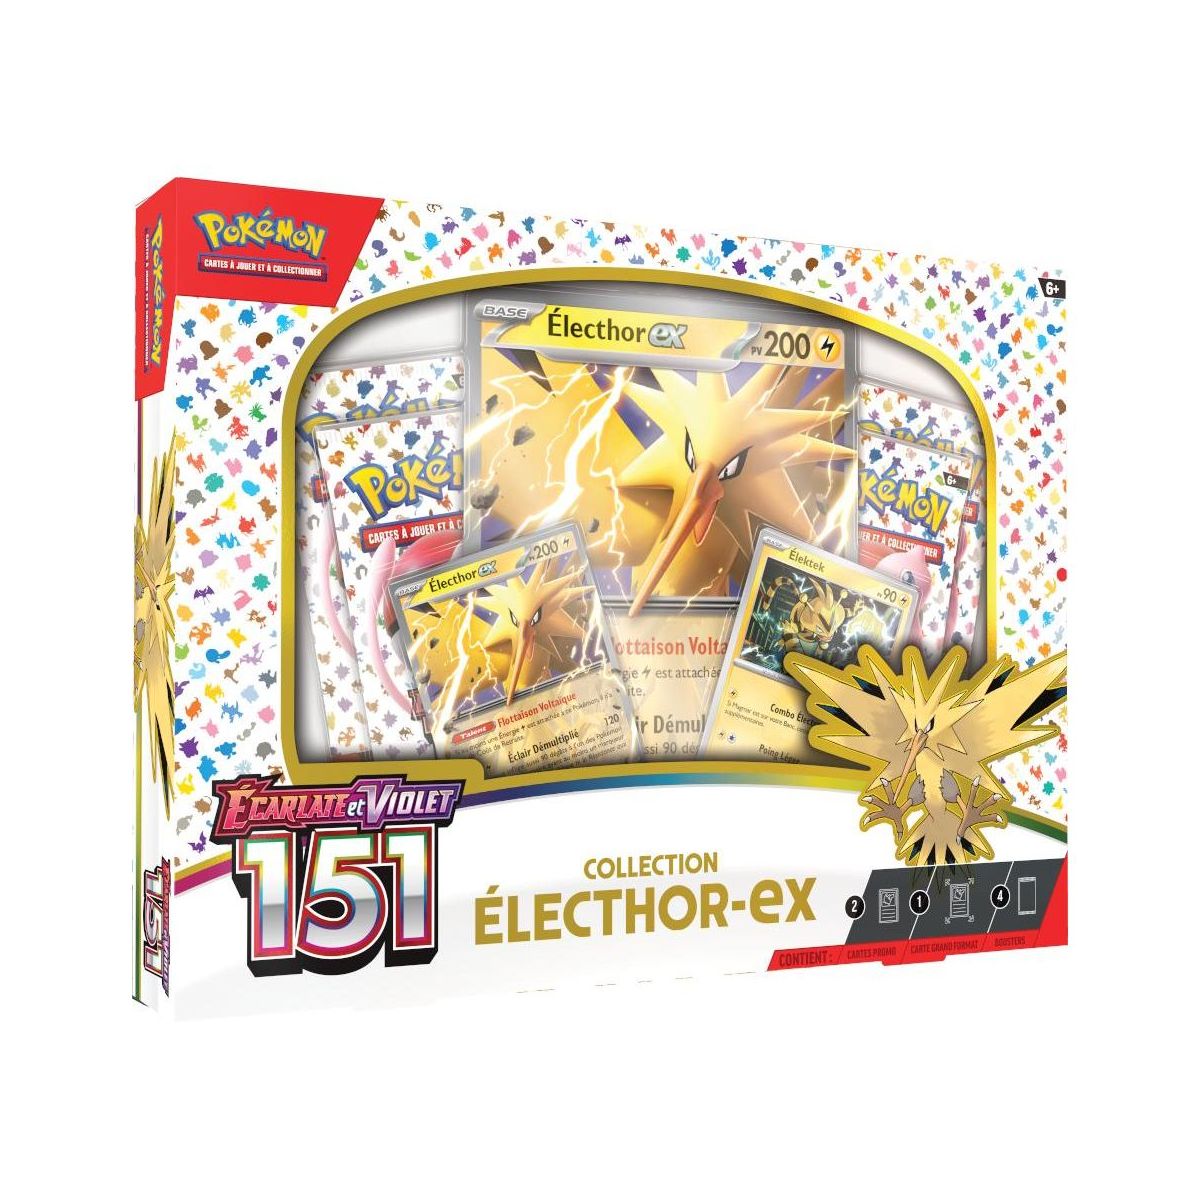 Item Pokémon - Coffret Collection Electhor EX - Ecarlate et Violet - 151 -[SV03.5 - EV03.5] - FR